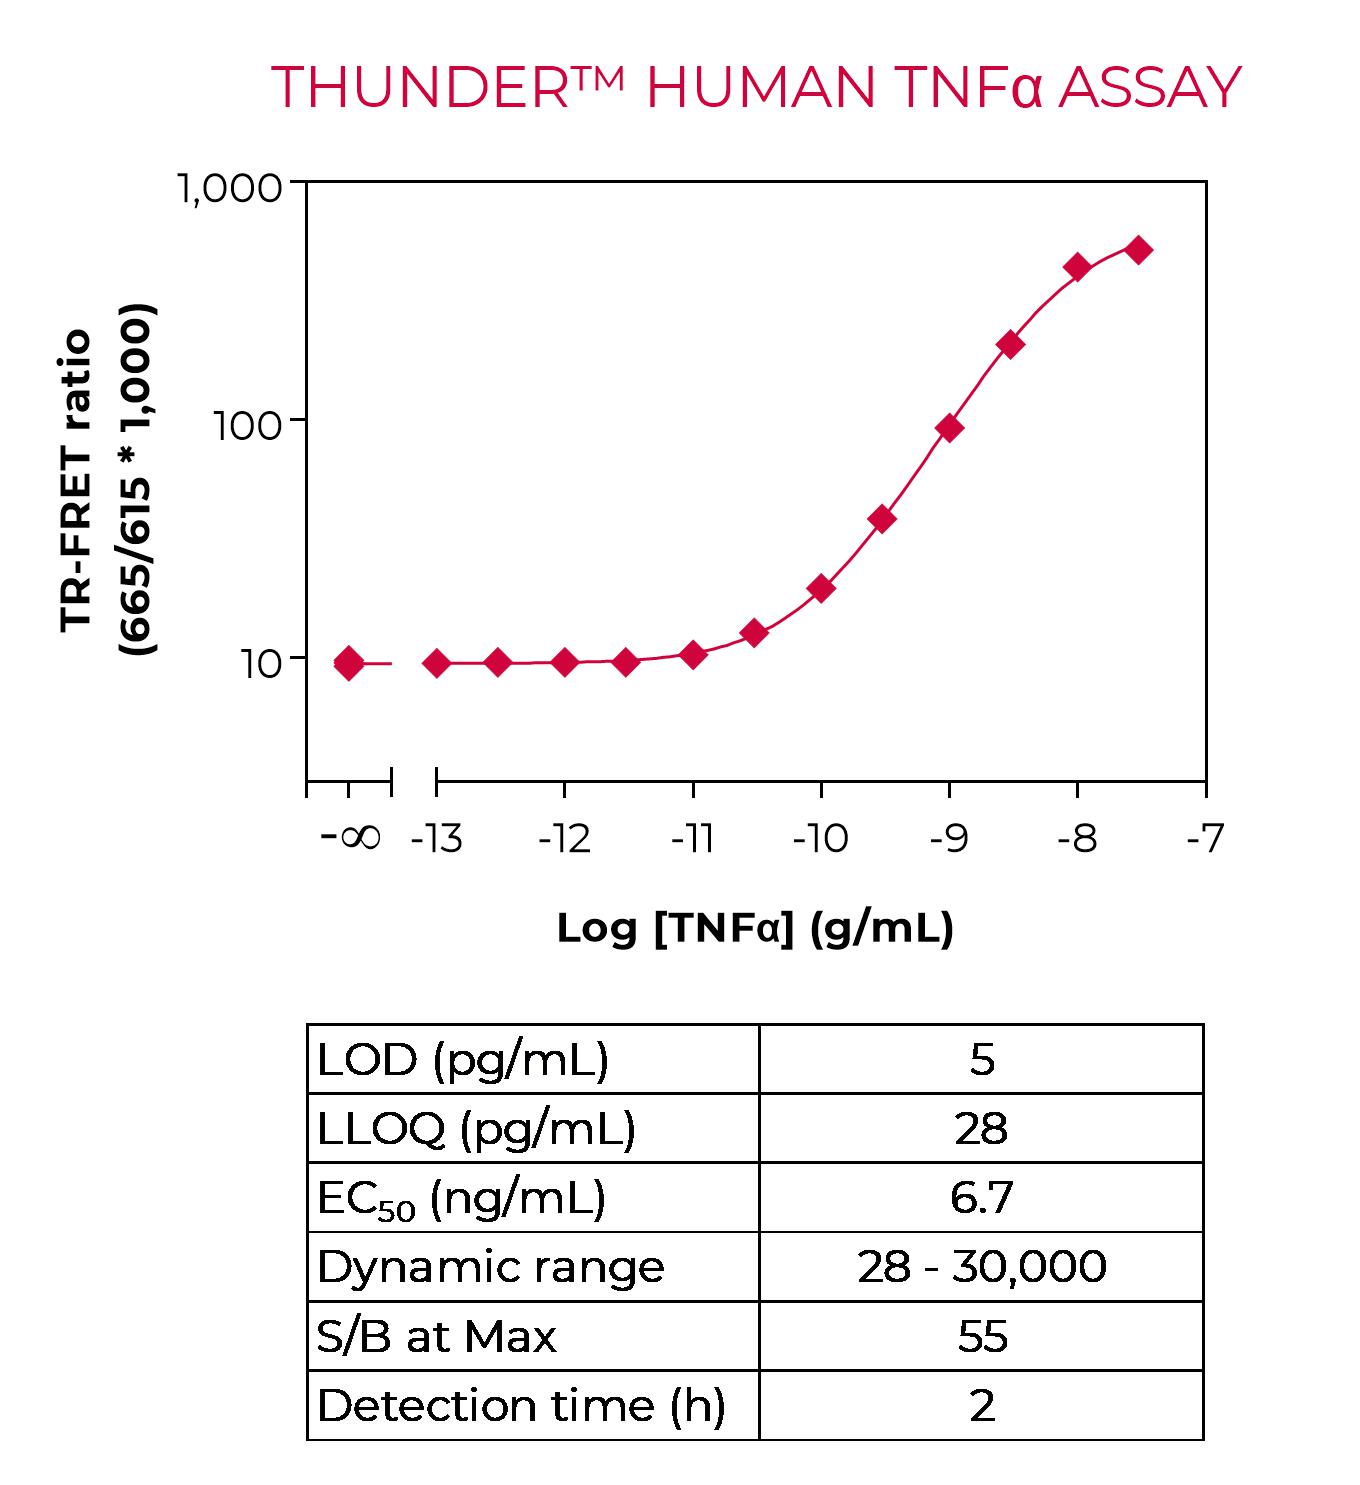 THUNDER Human TNFα standard curve